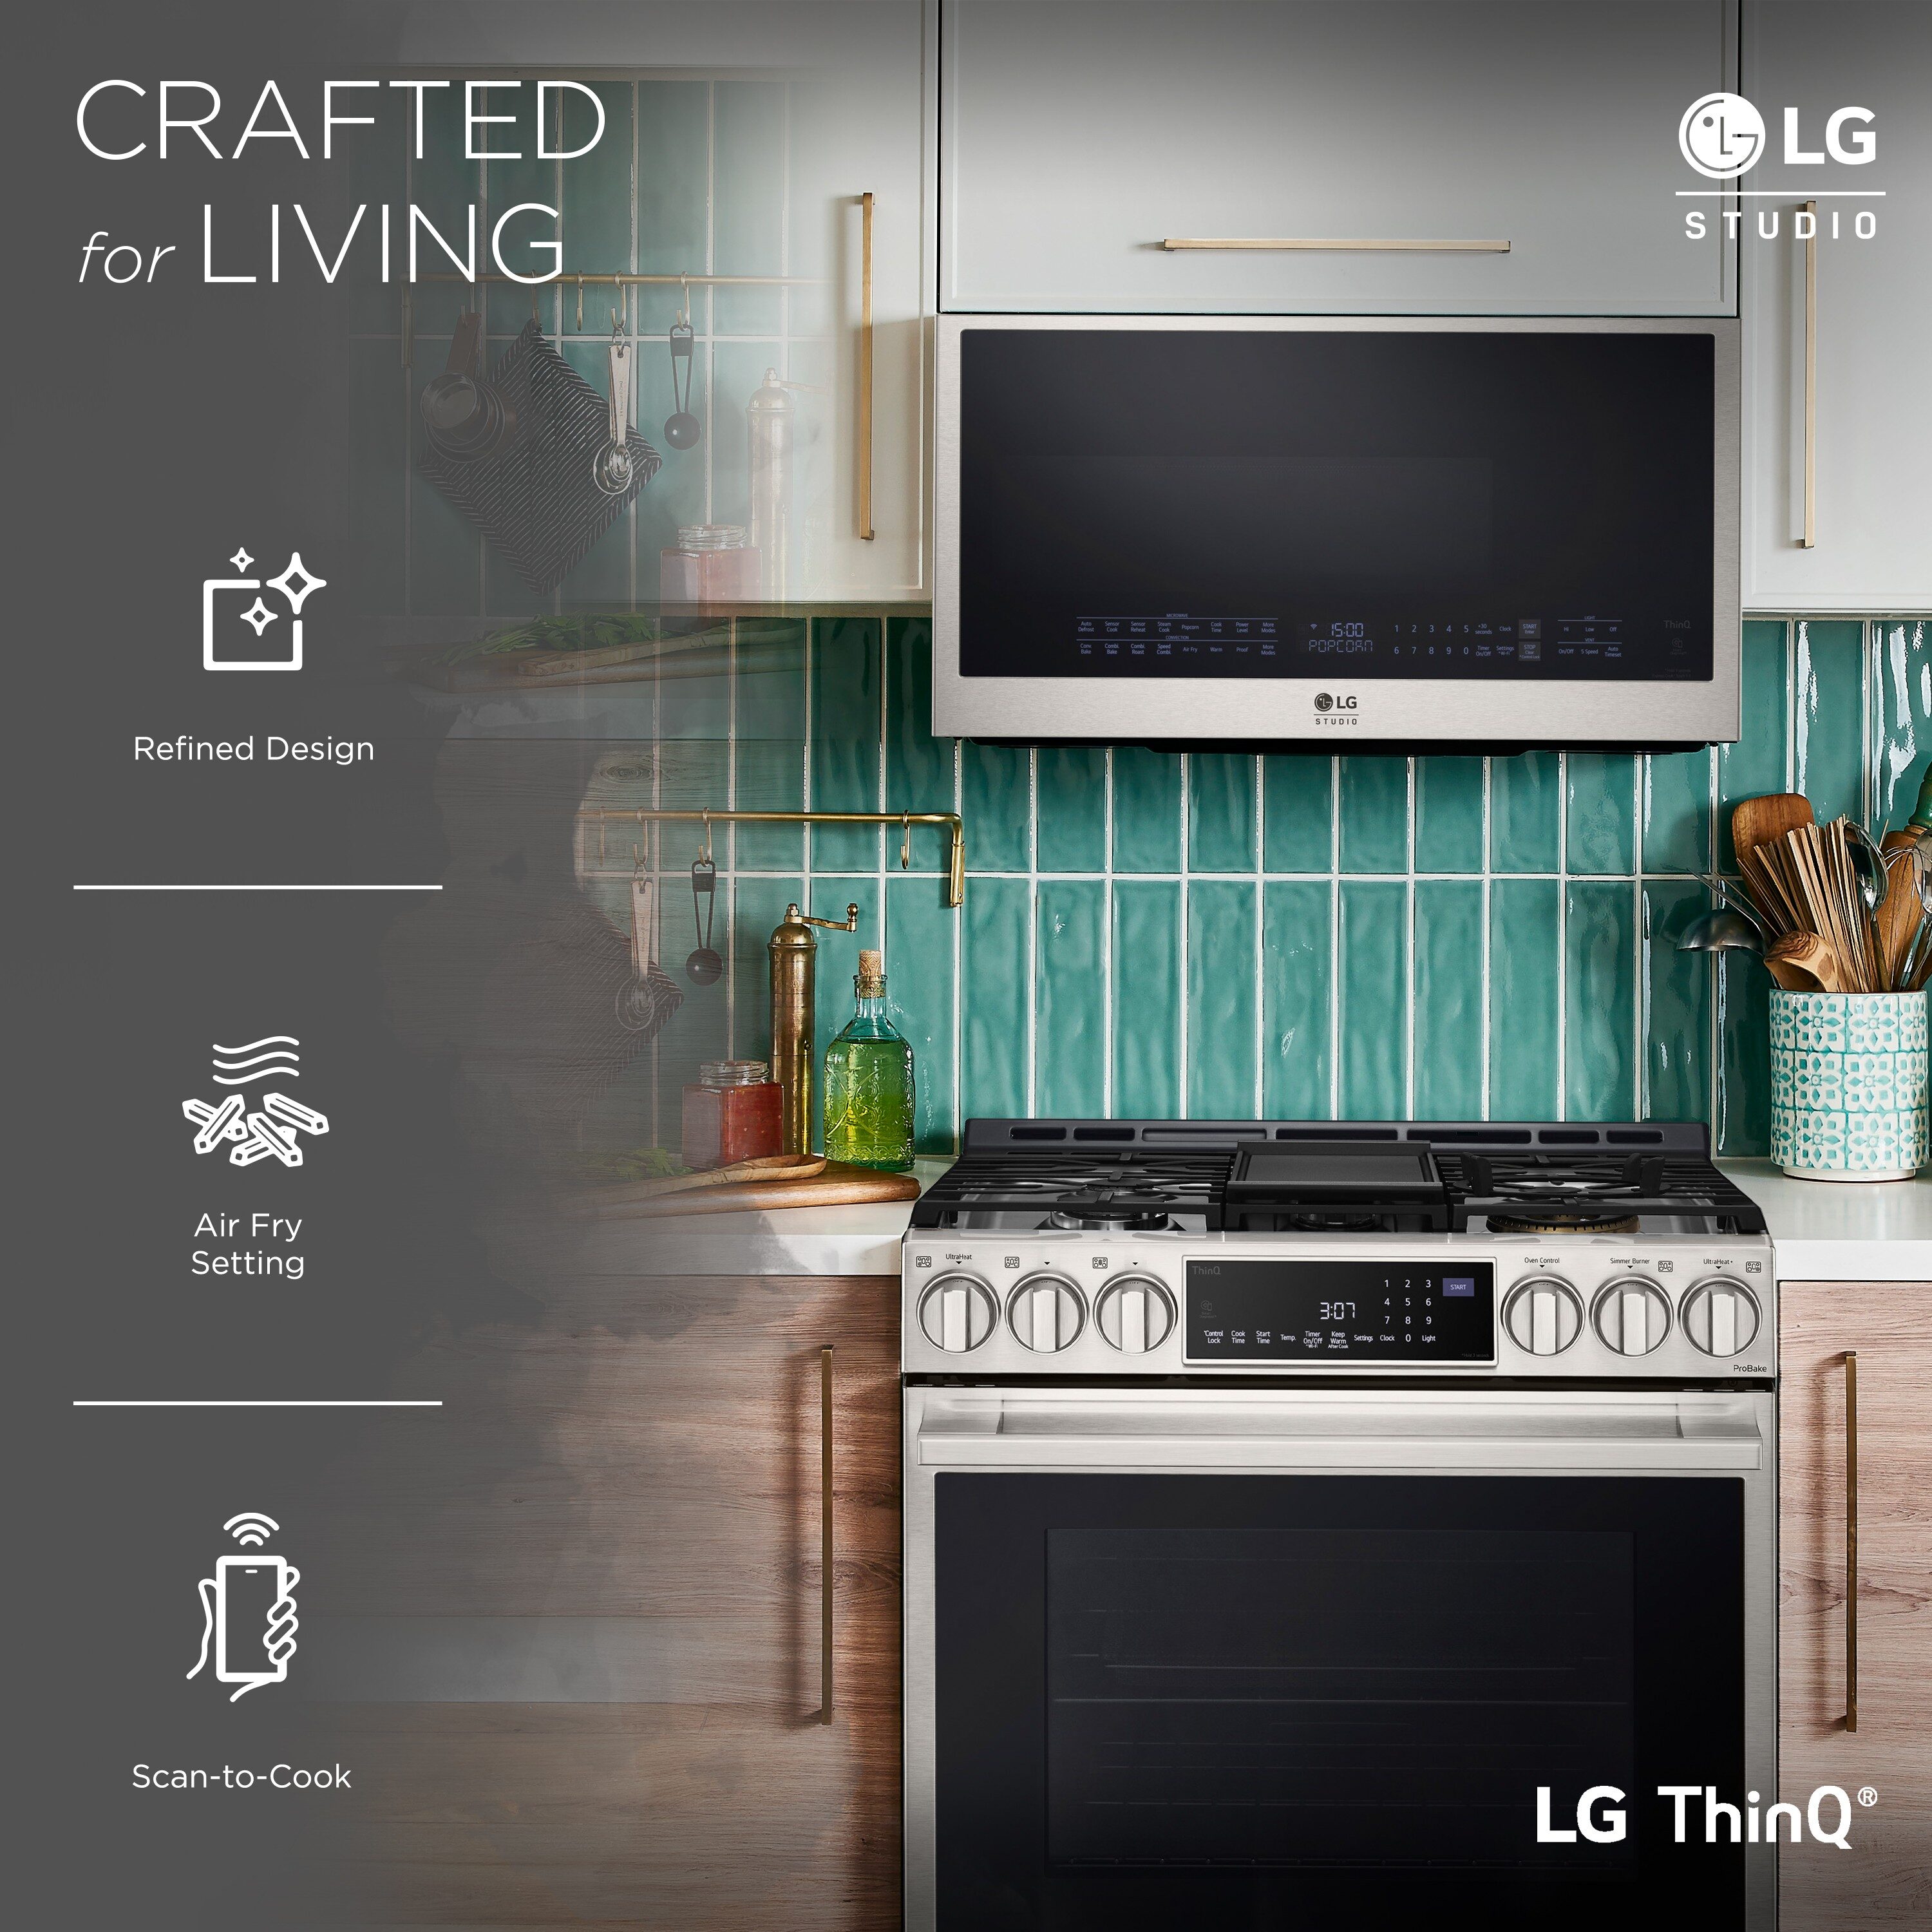 LG STUDIO Appliances - Smart Kitchens that Perform